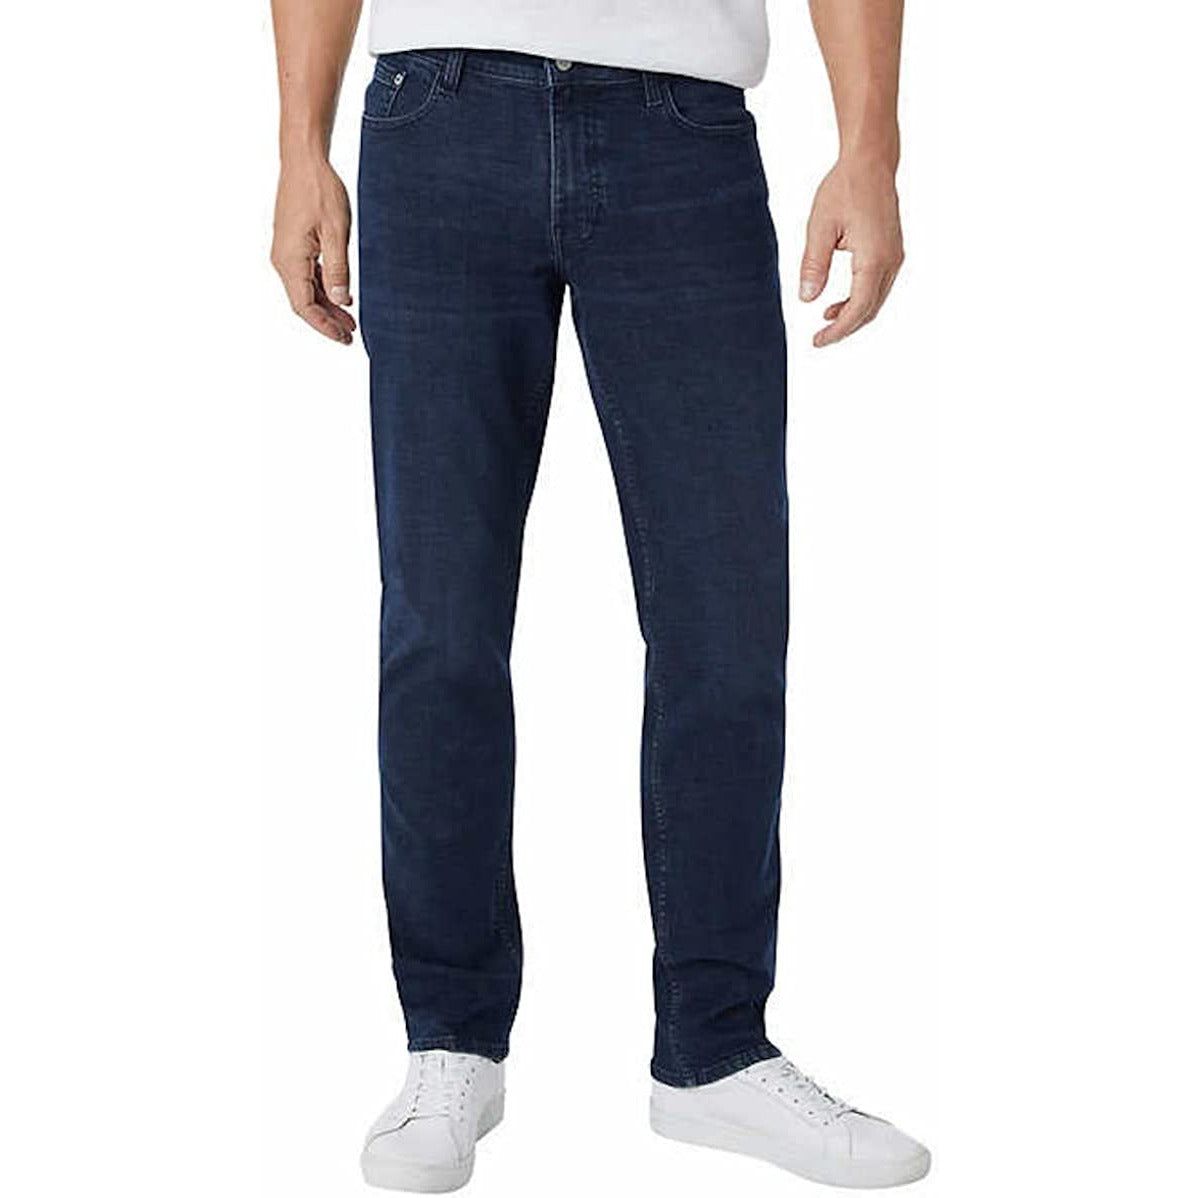 IZOD Men's Comfort Stretch Straight Fit Jeans - Premium Quality Denim